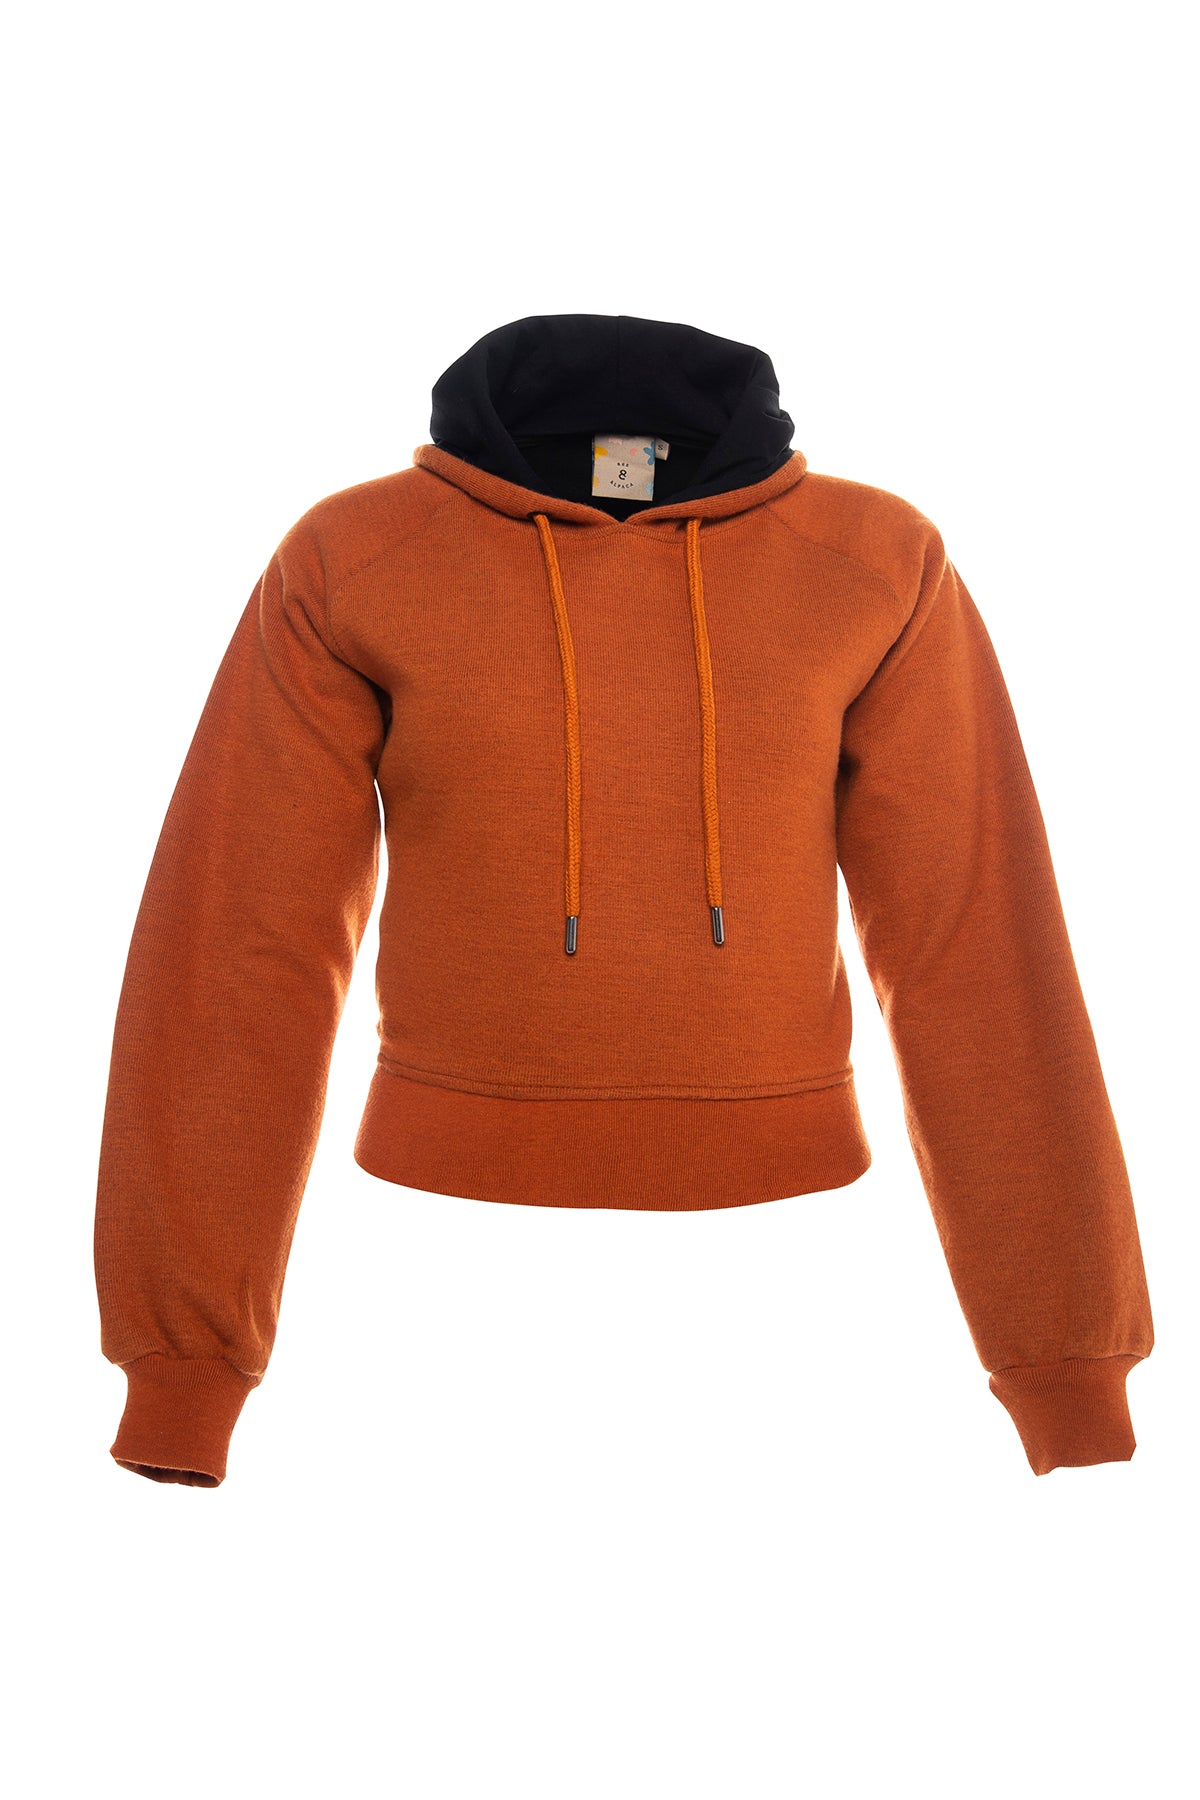 Soft-feeling cozy cropped hoodie in tiger orange.